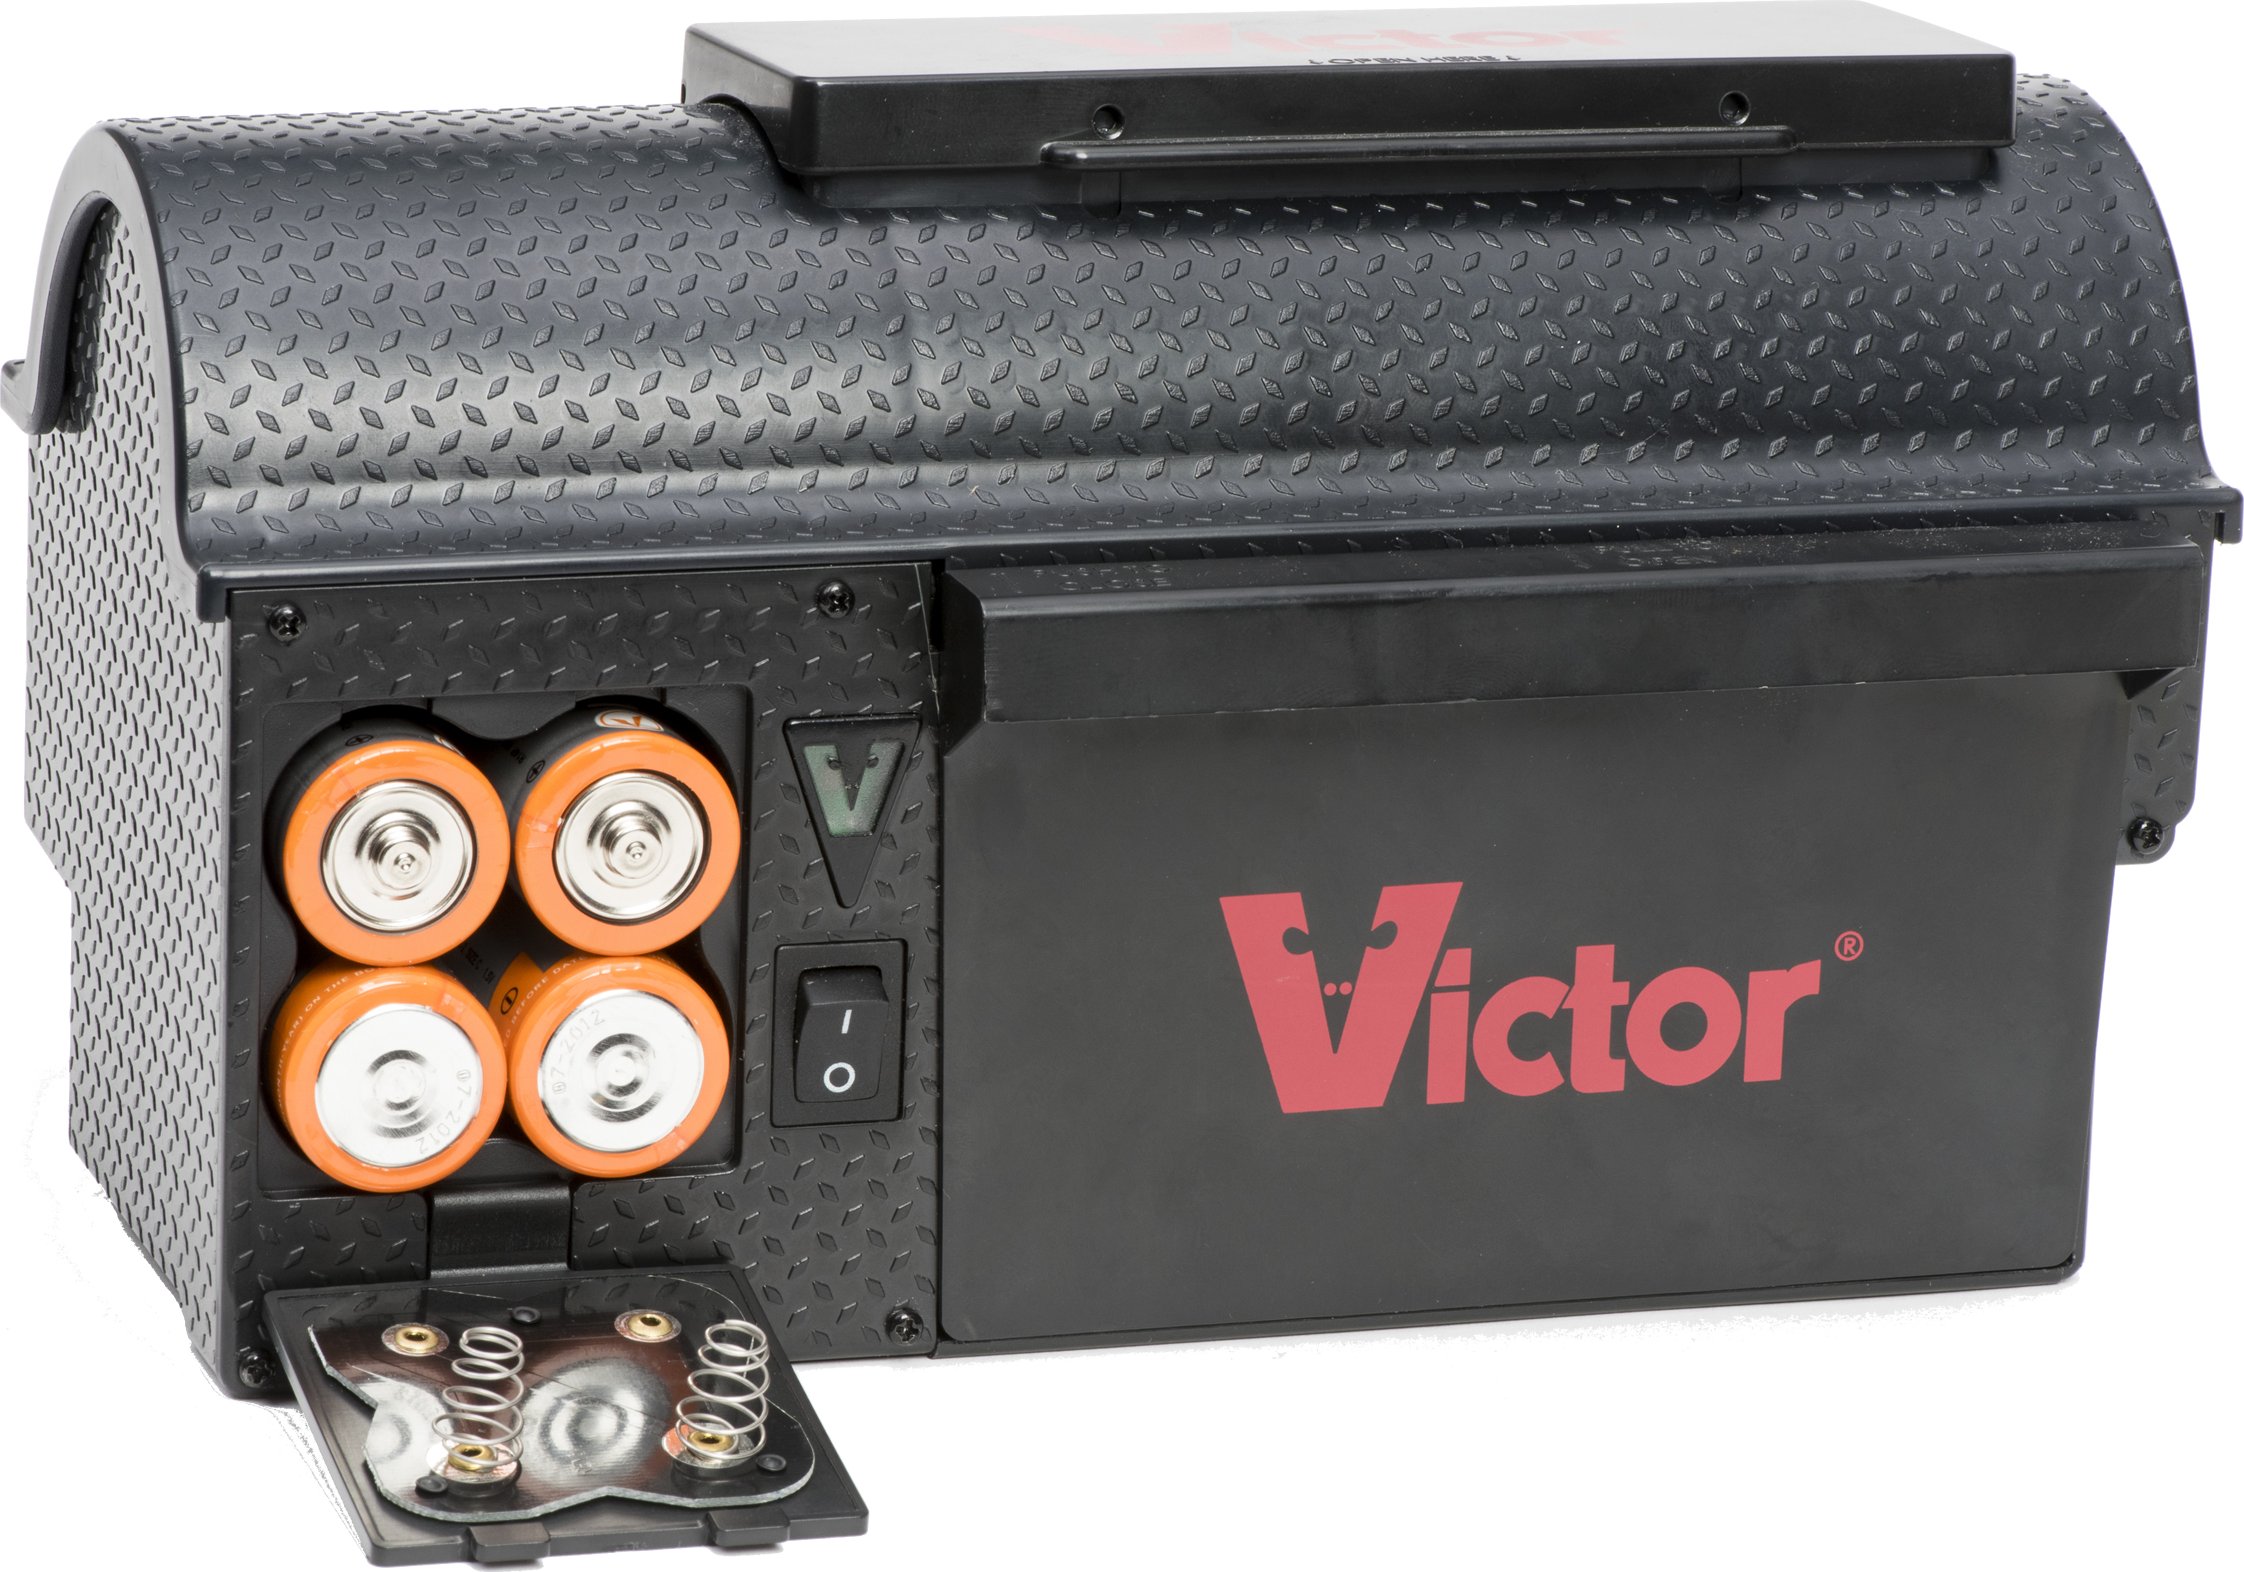 Victor Multi Kill Electronic Mouse Trap 